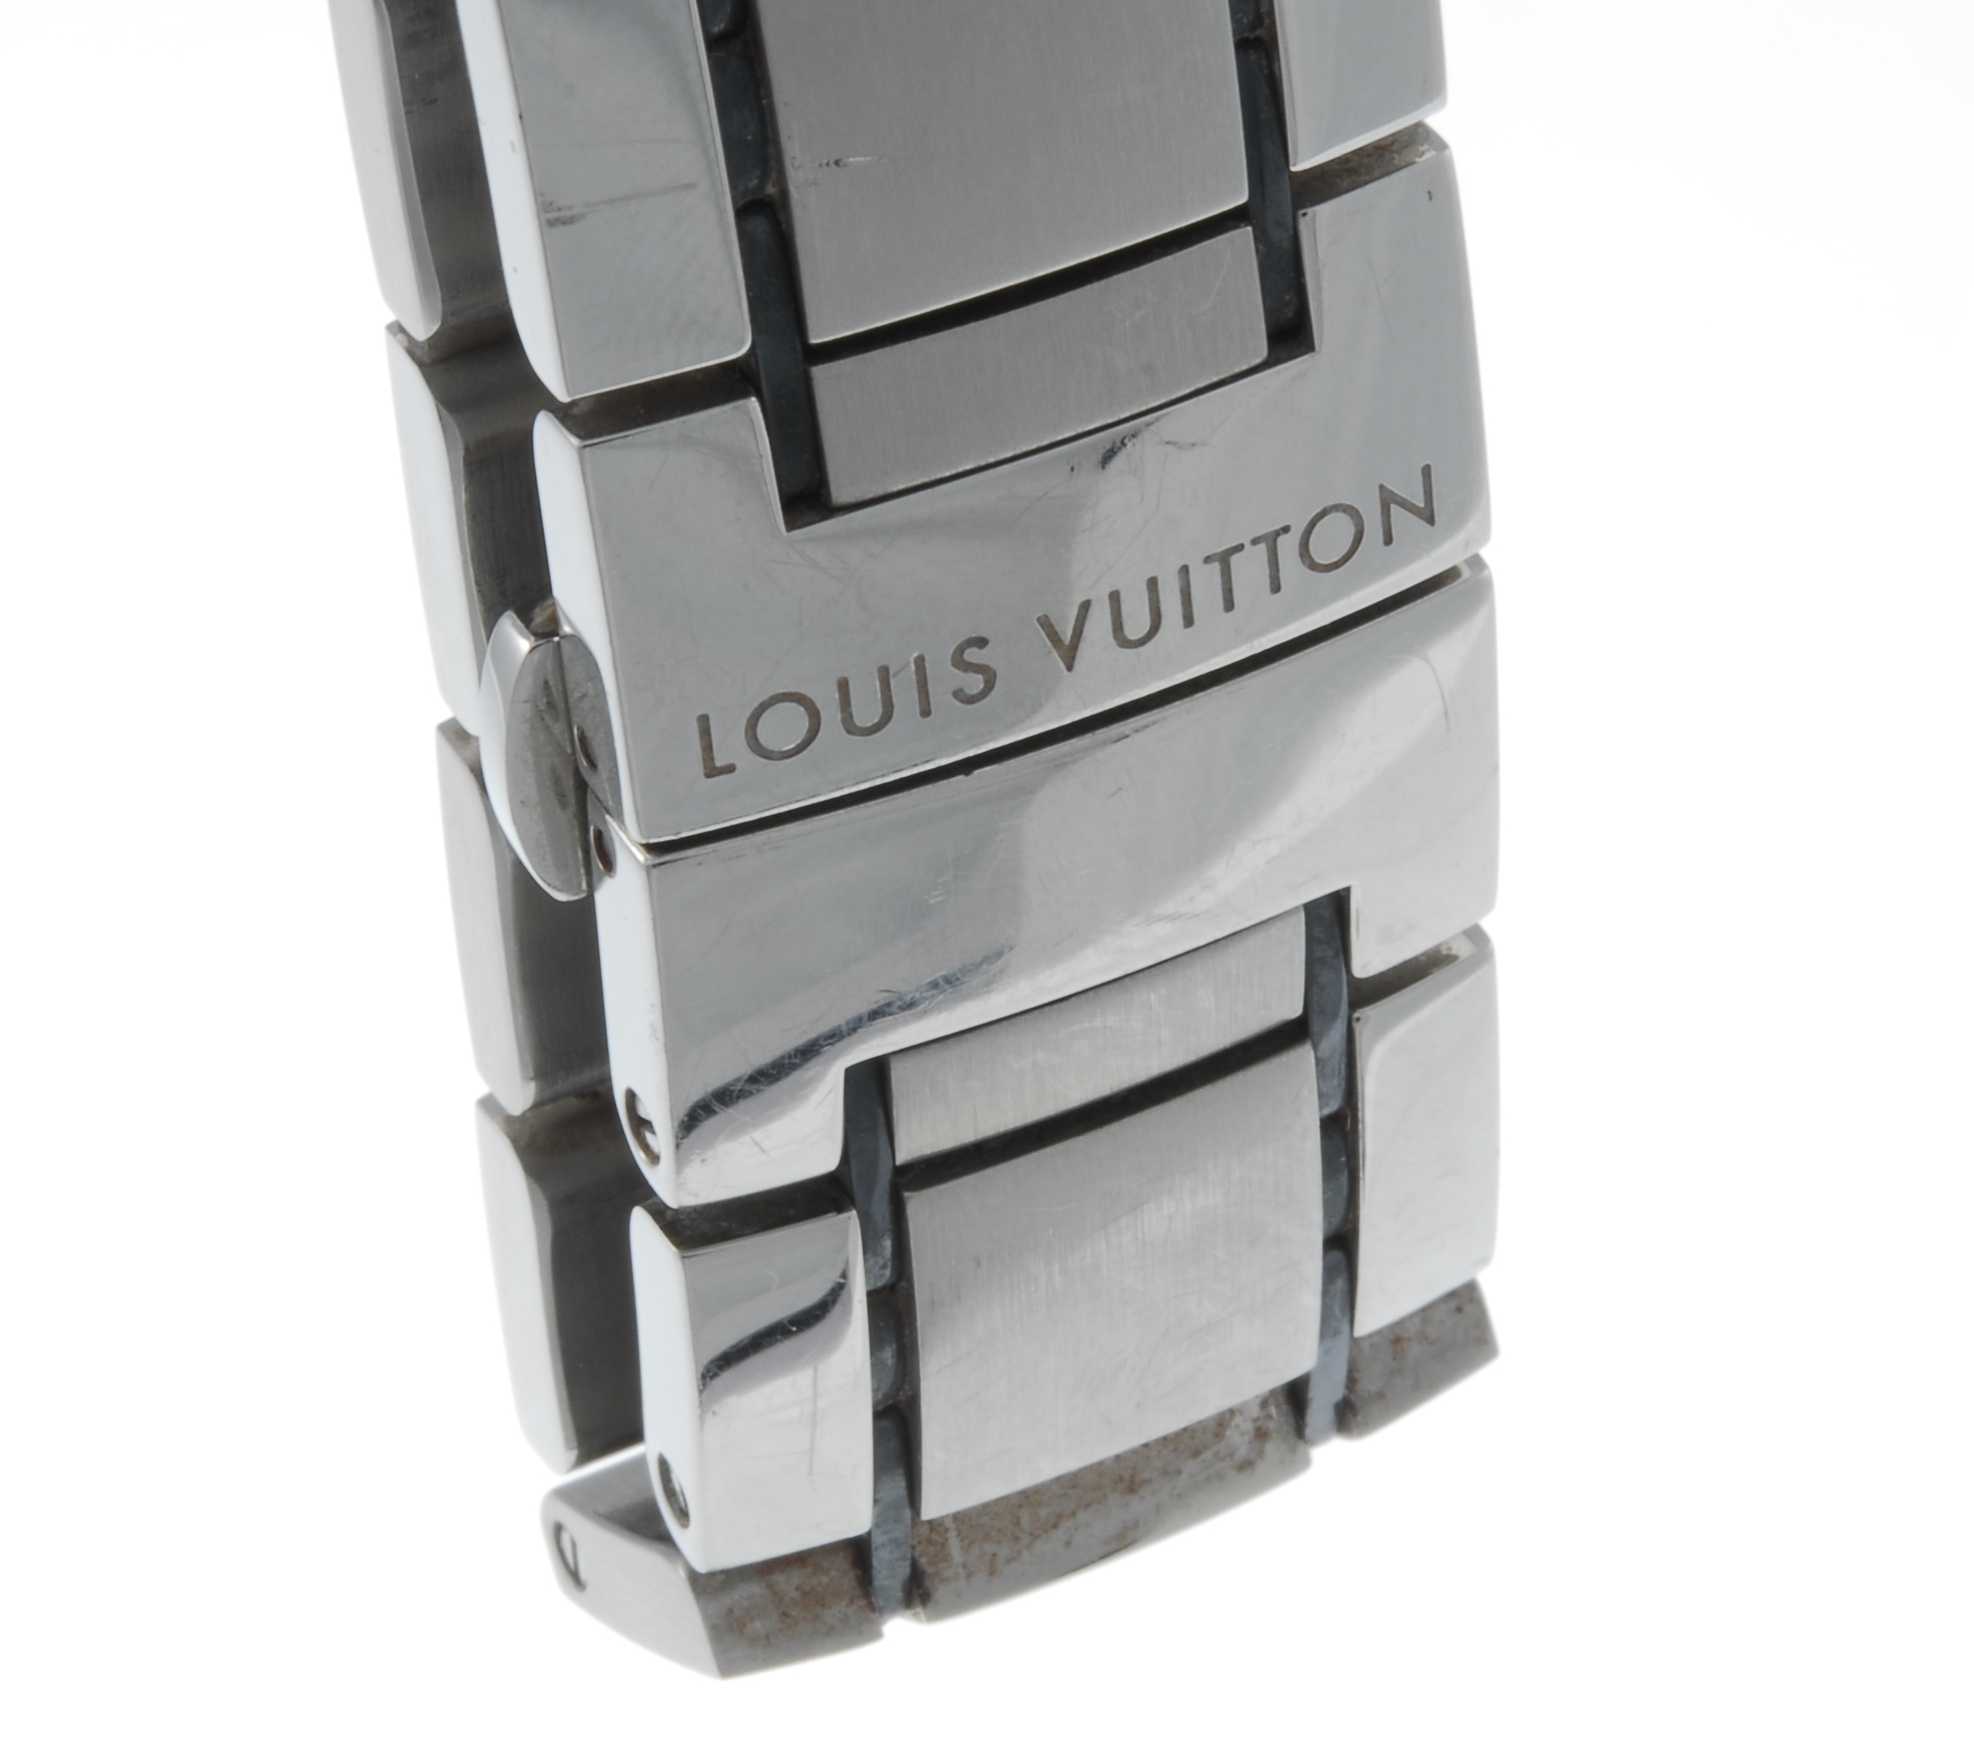 LOUIS VUITTON - a gentleman's Tambour Regatta chronograph bracelet watch. Stainless steel case. - Image 4 of 4